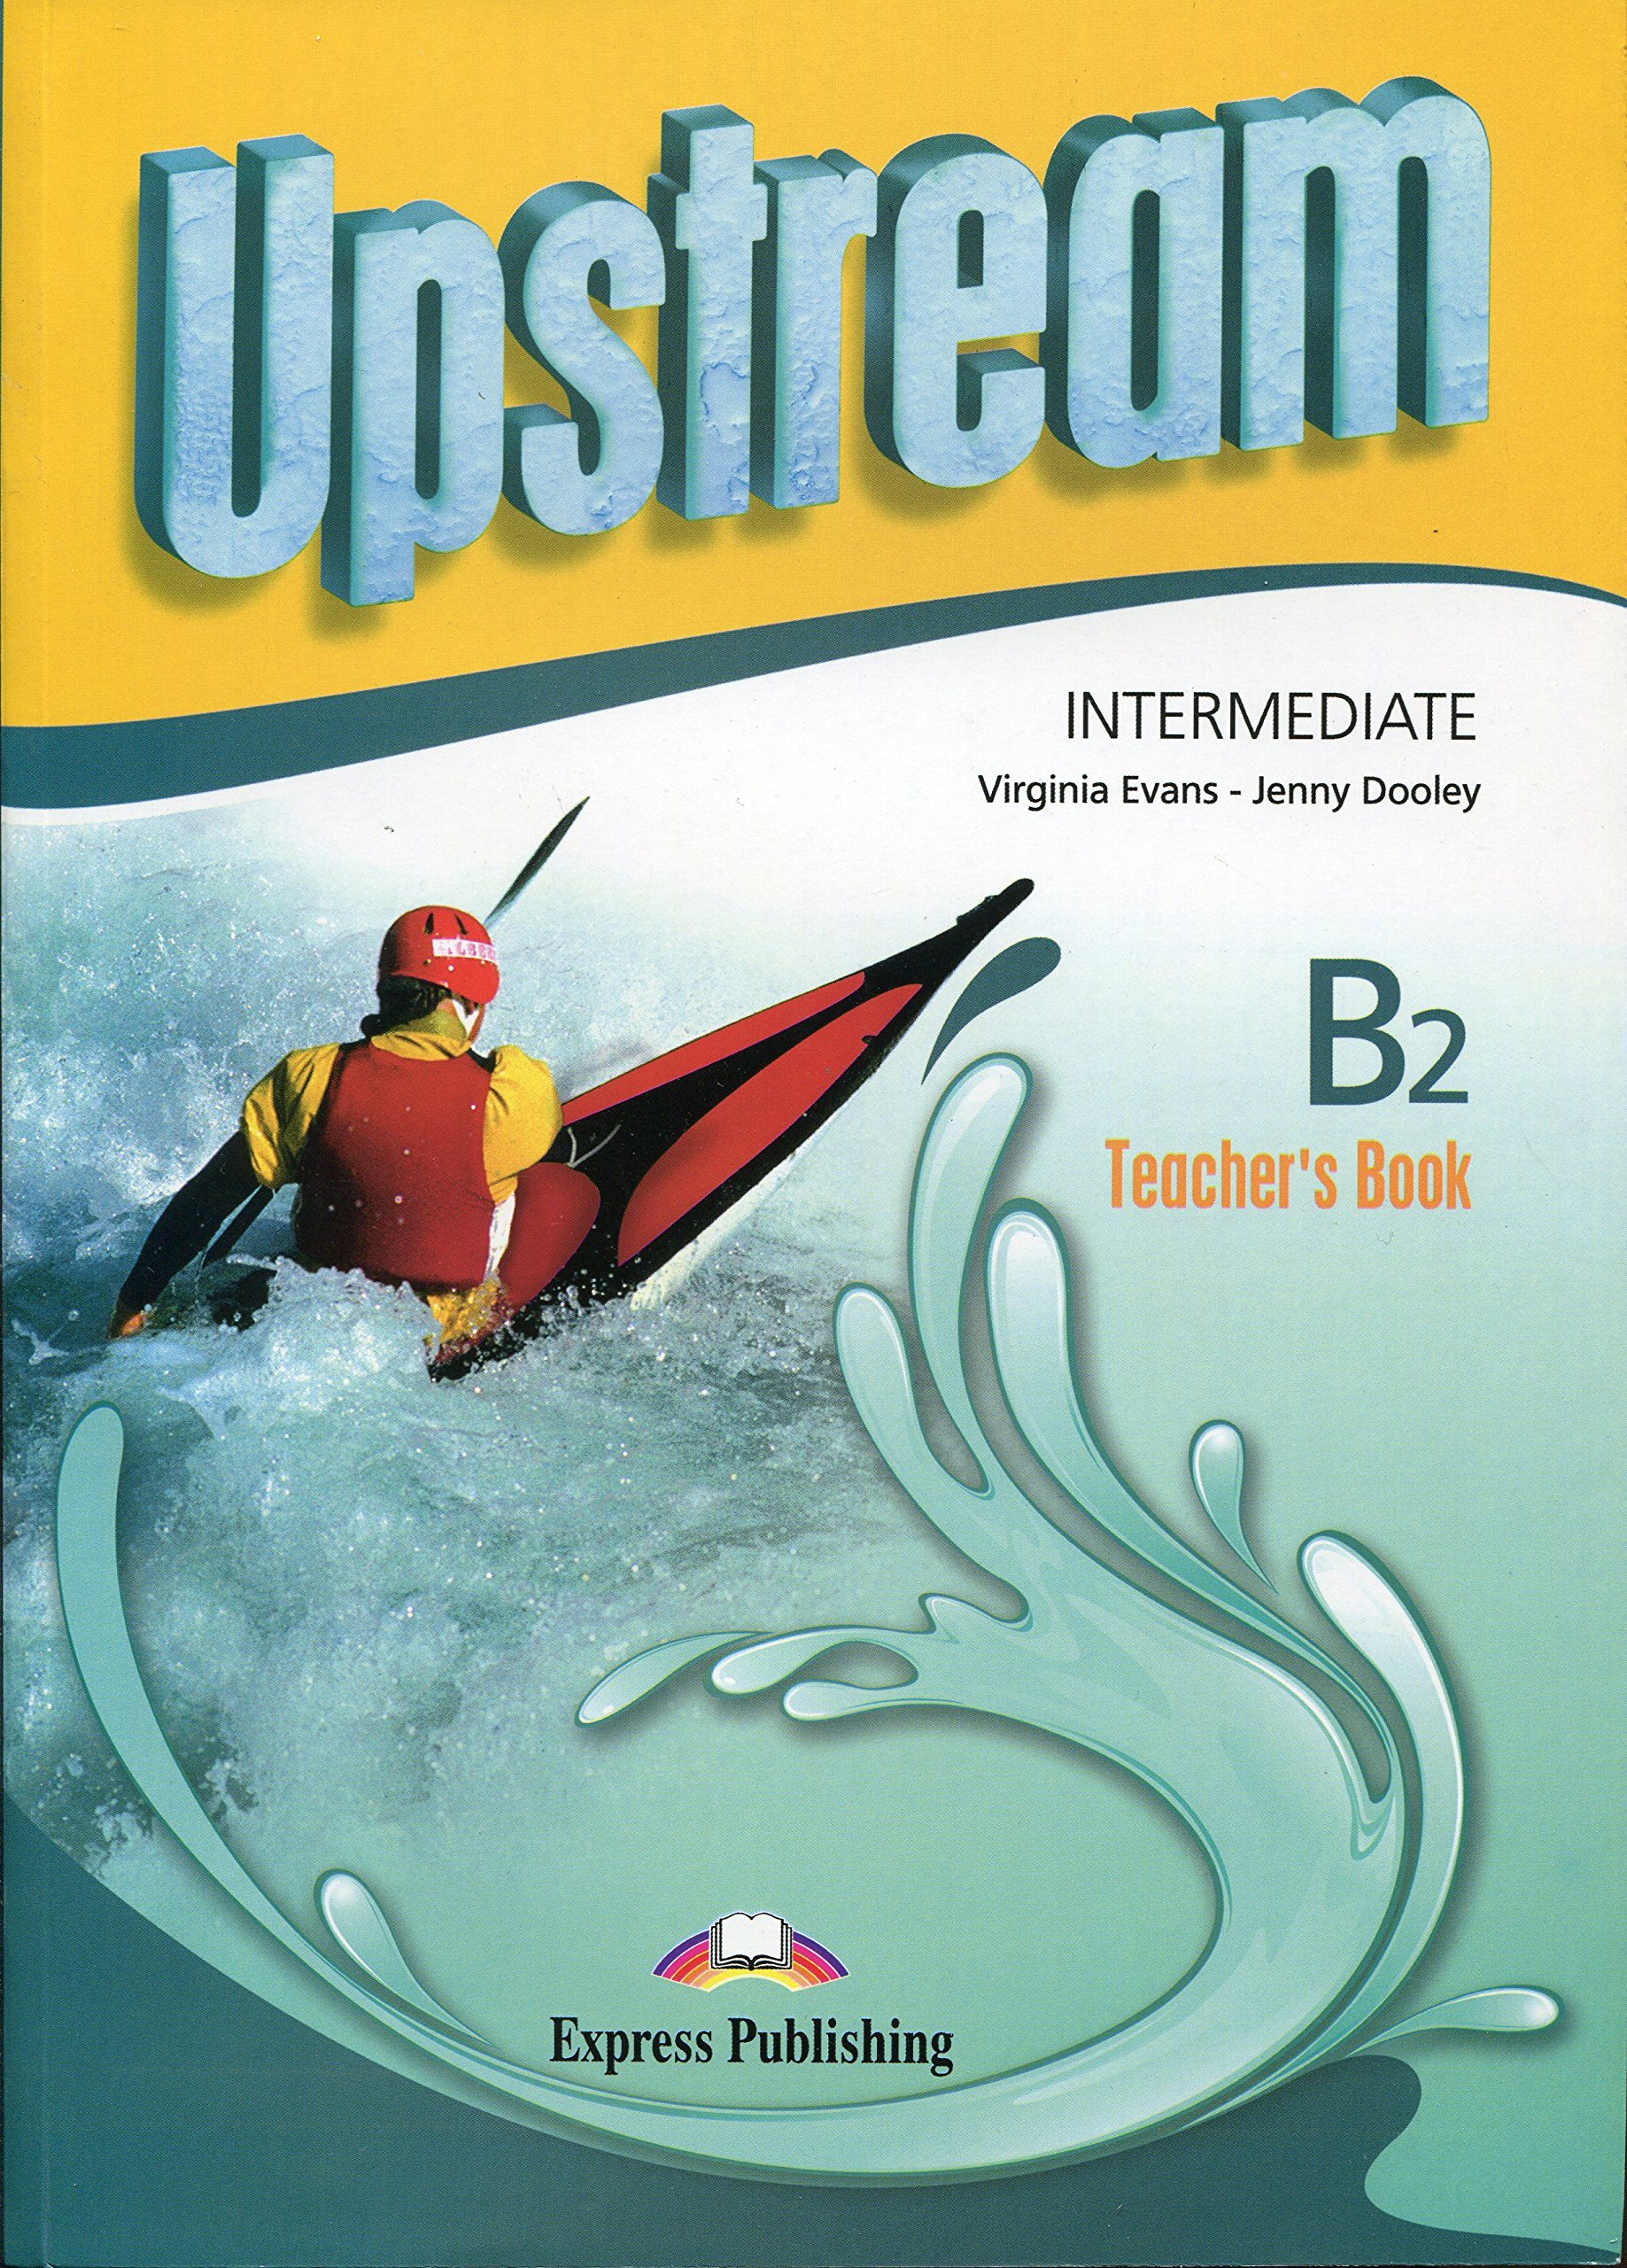 UPSTREAM INTERMEDIATE 3rd ED Teacher's Book